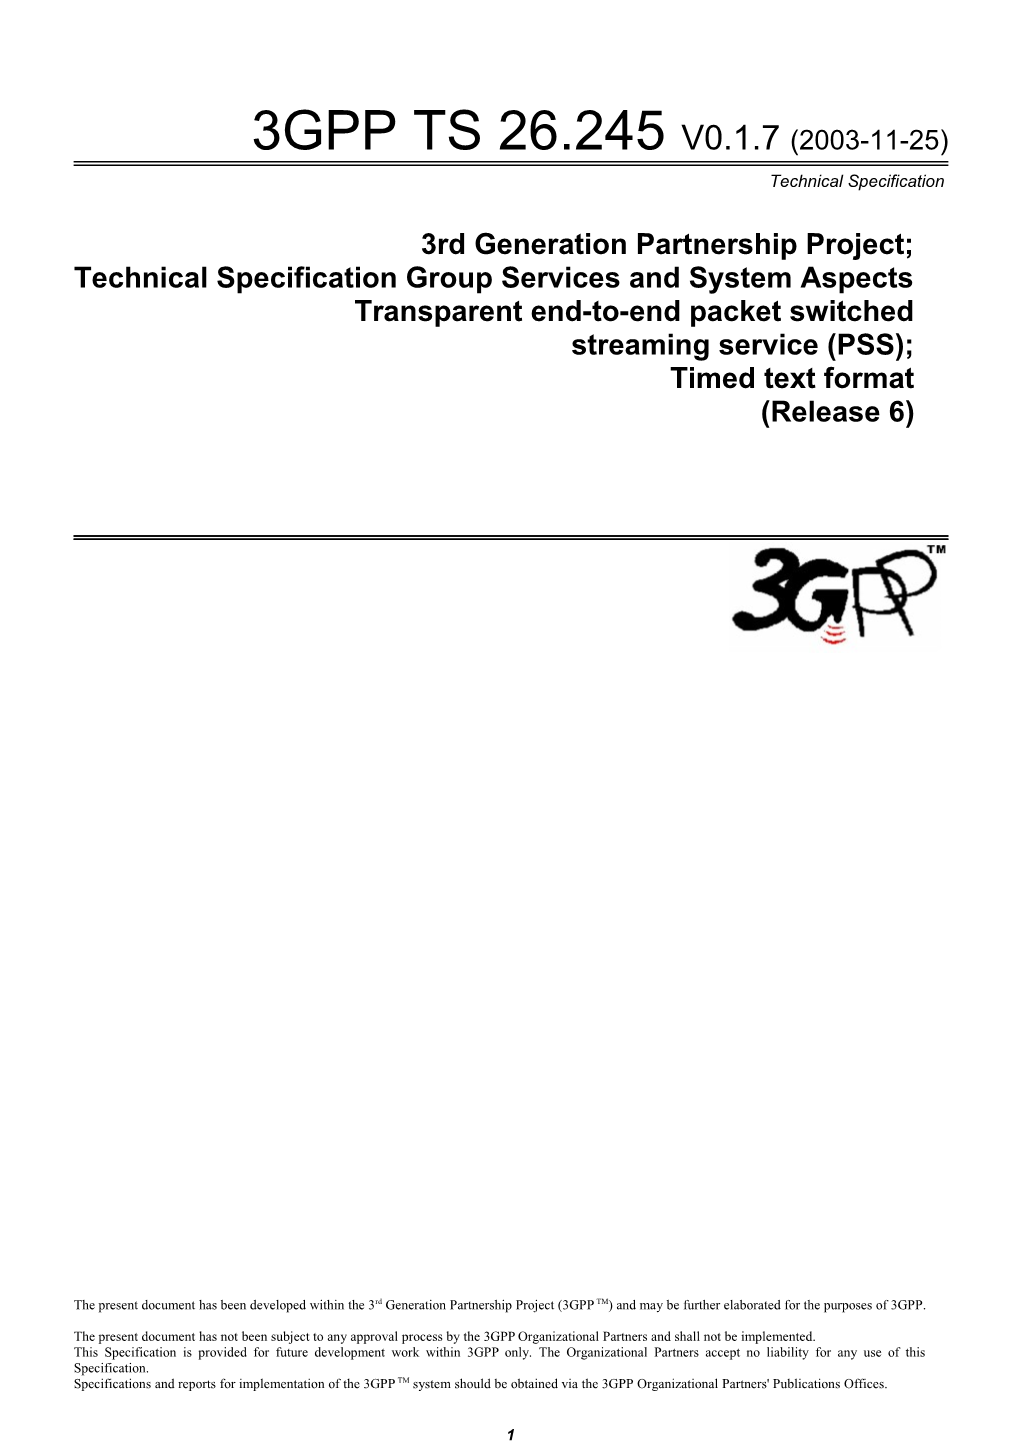 3Rd Generation Partnership Project;